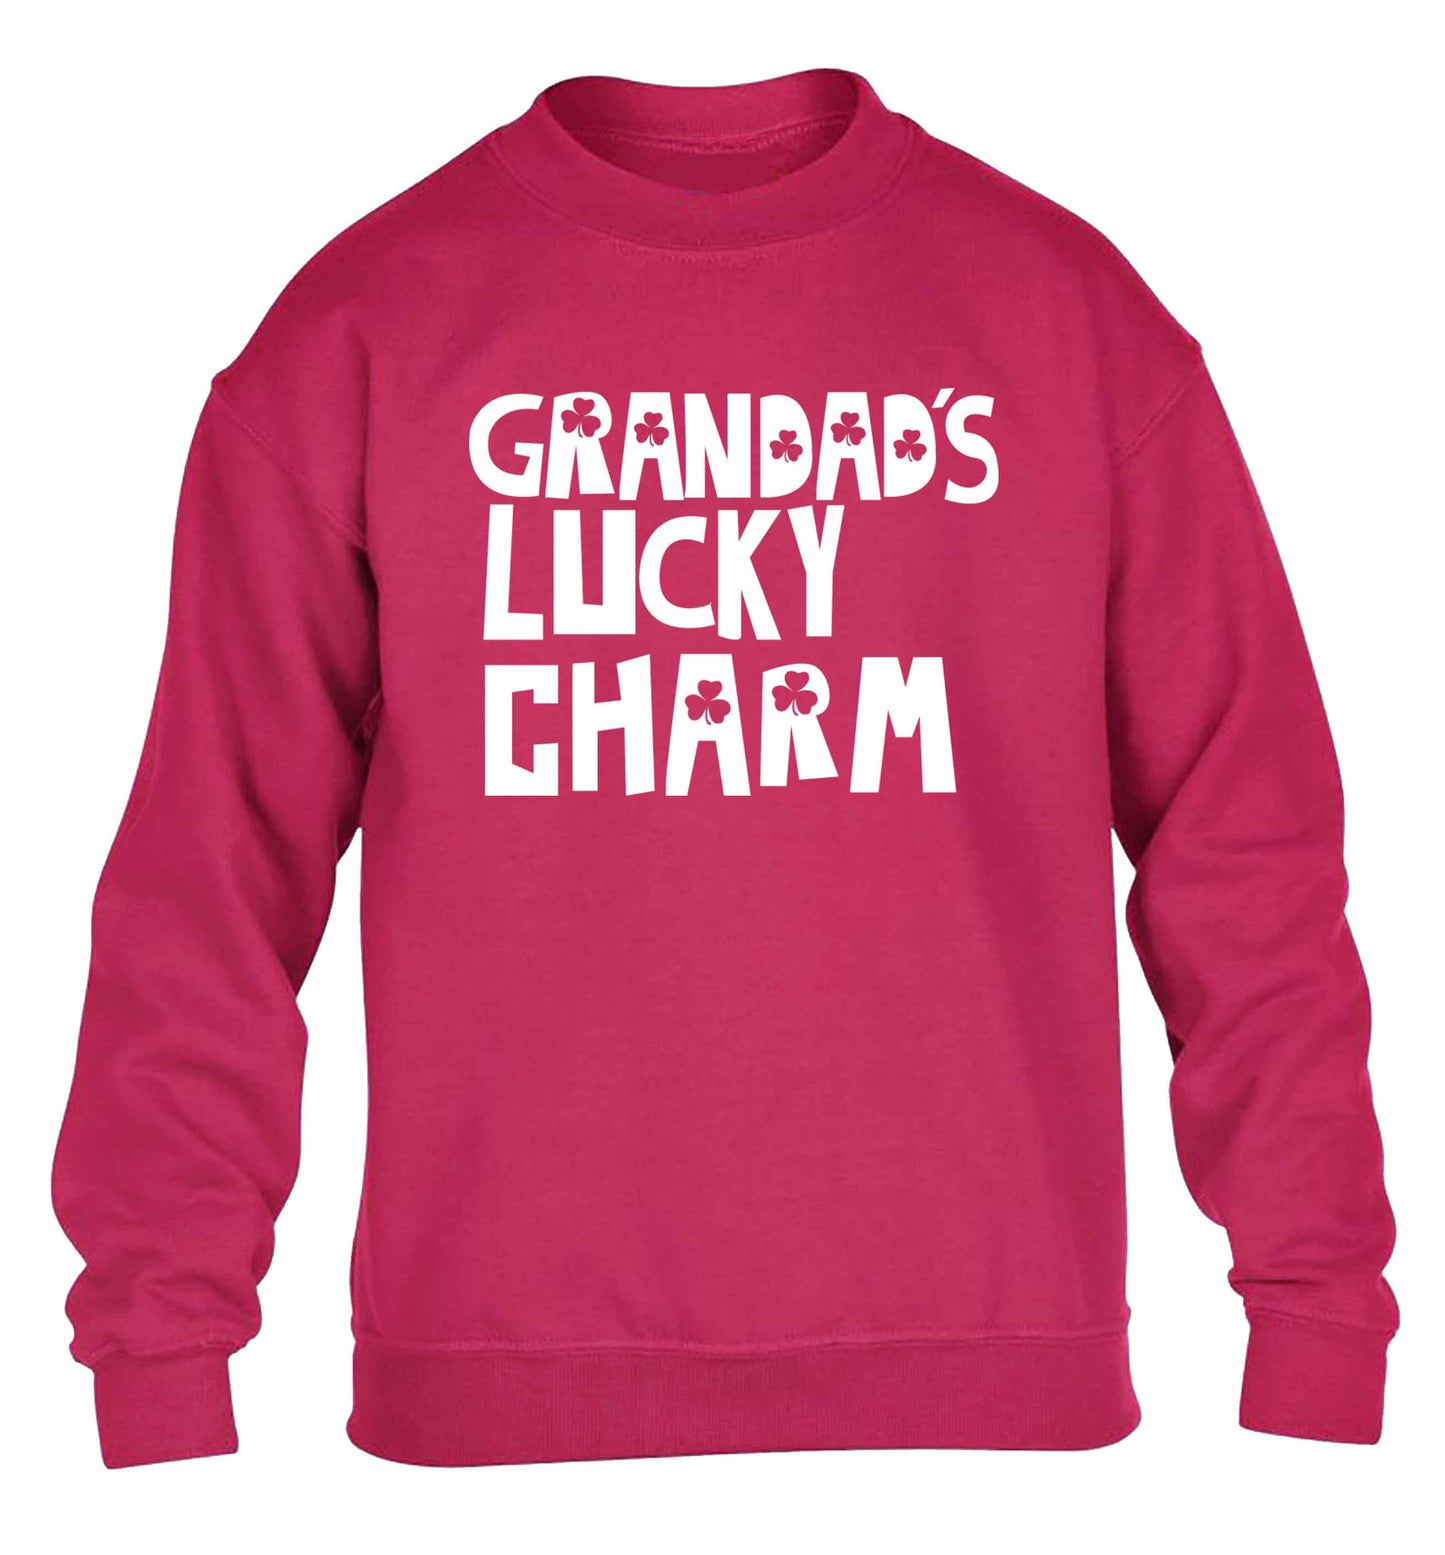 Grandad's lucky charm  children's pink sweater 12-13 Years